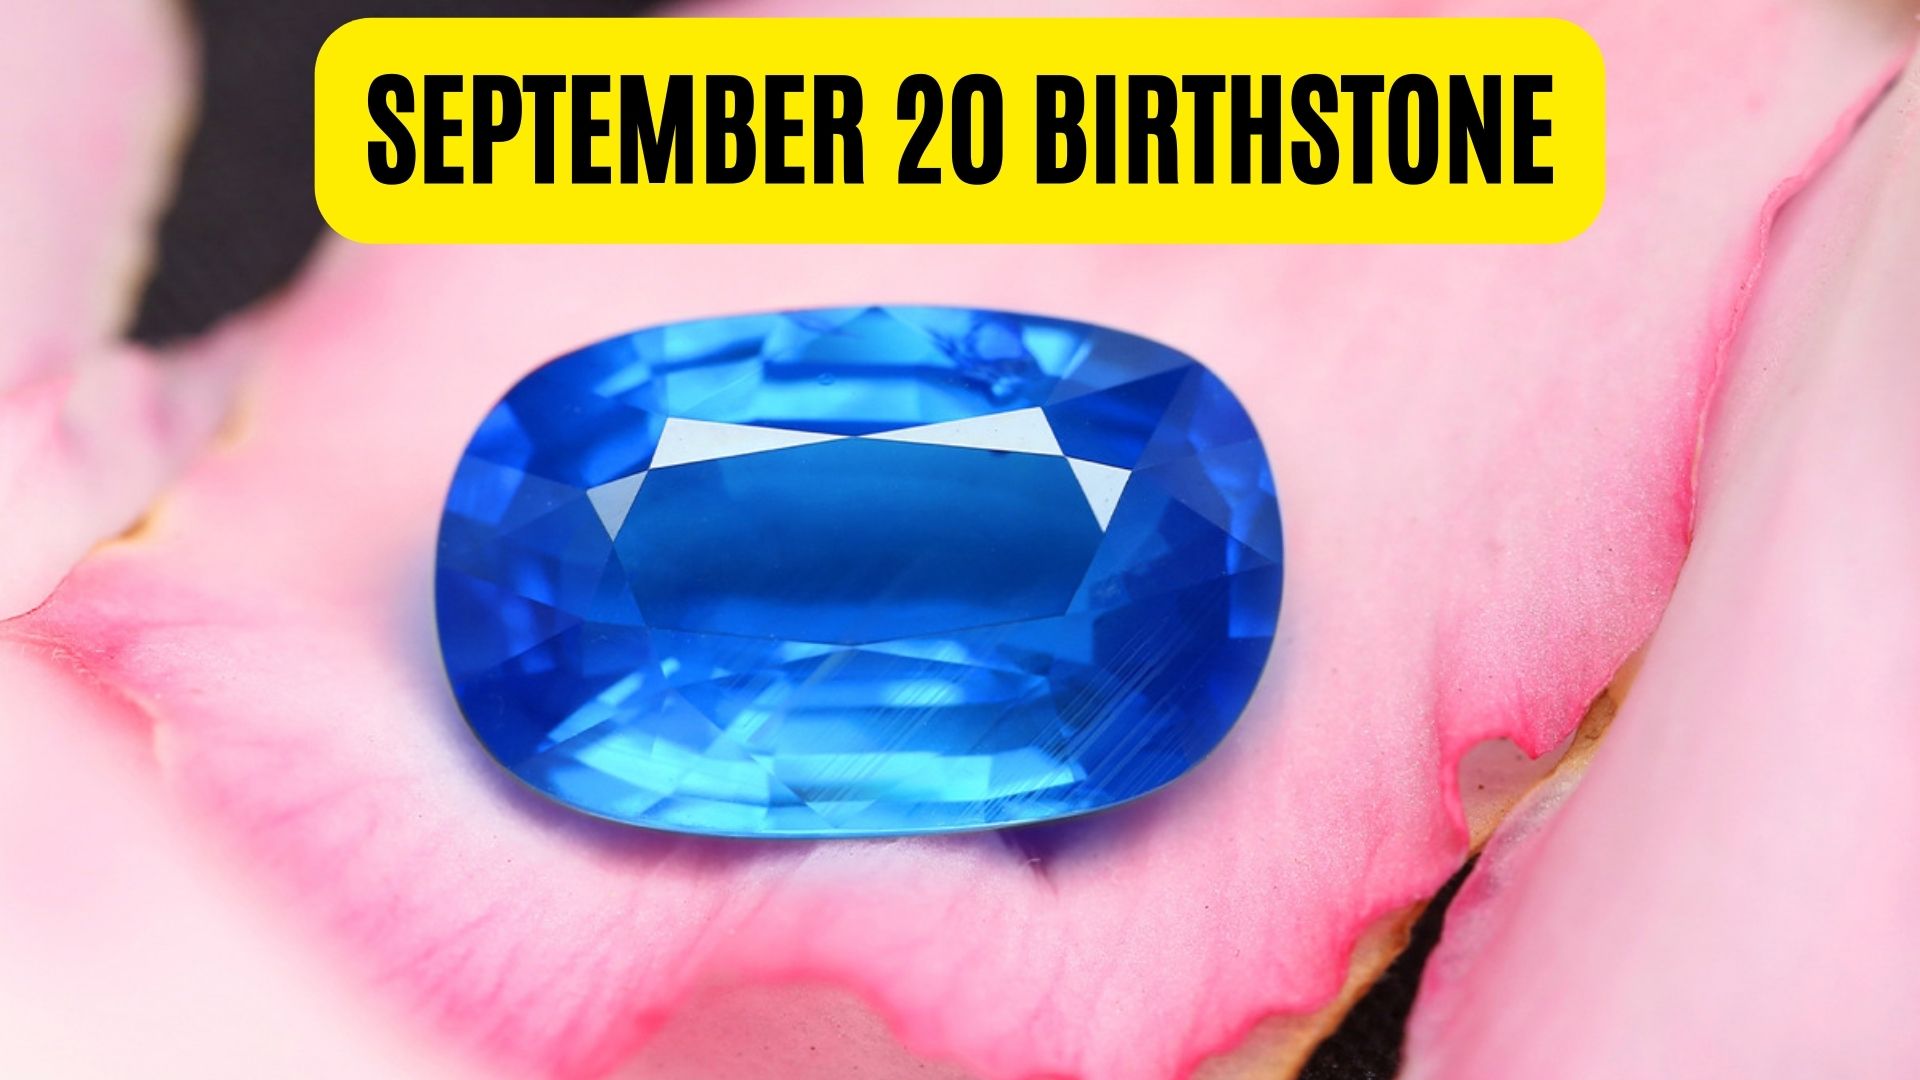 September 20 Birthstone - Sapphire